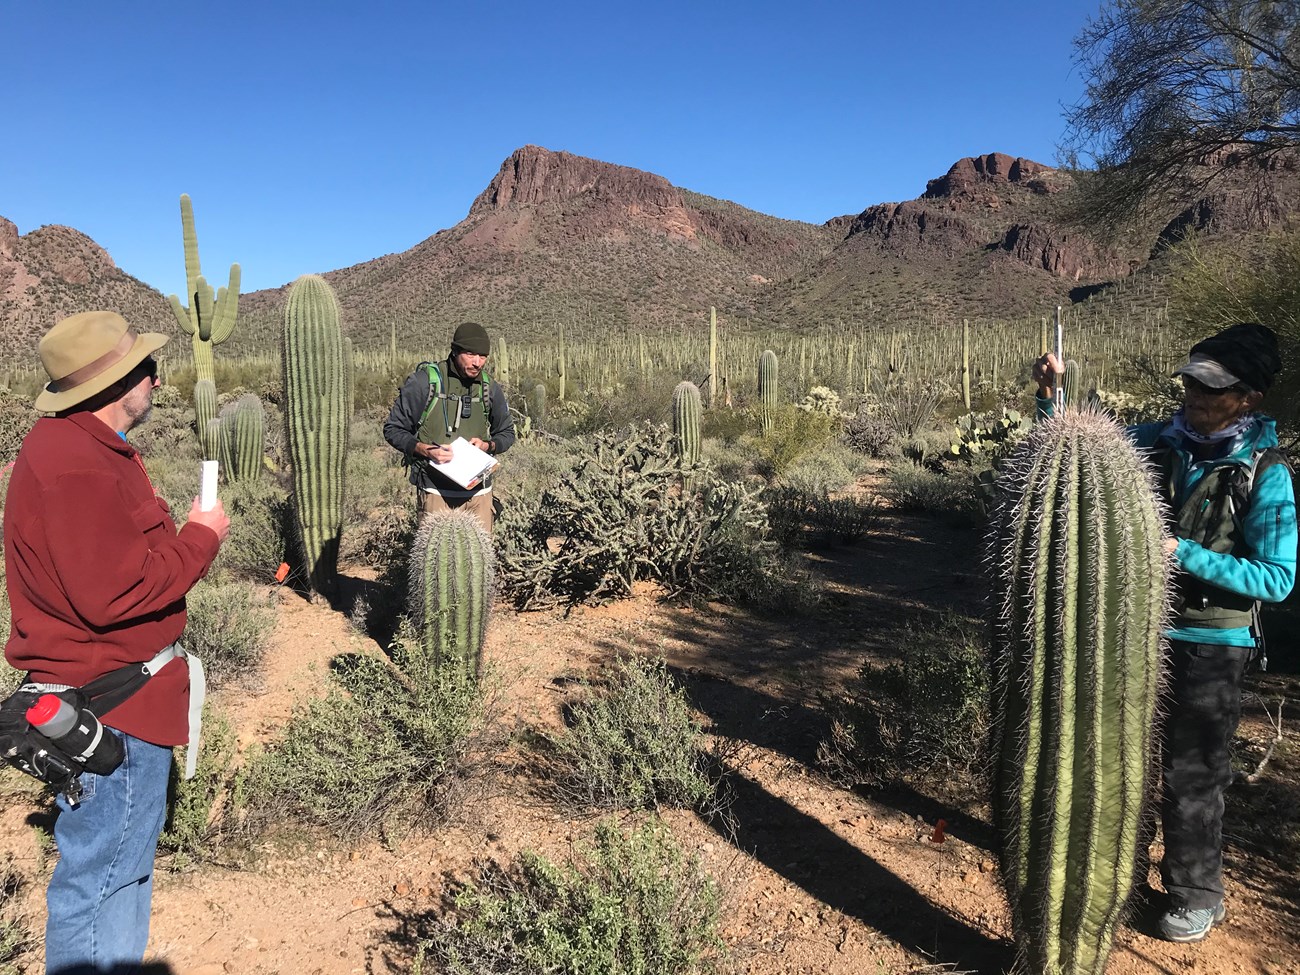 Volunteers measuring the height of a saguaro.